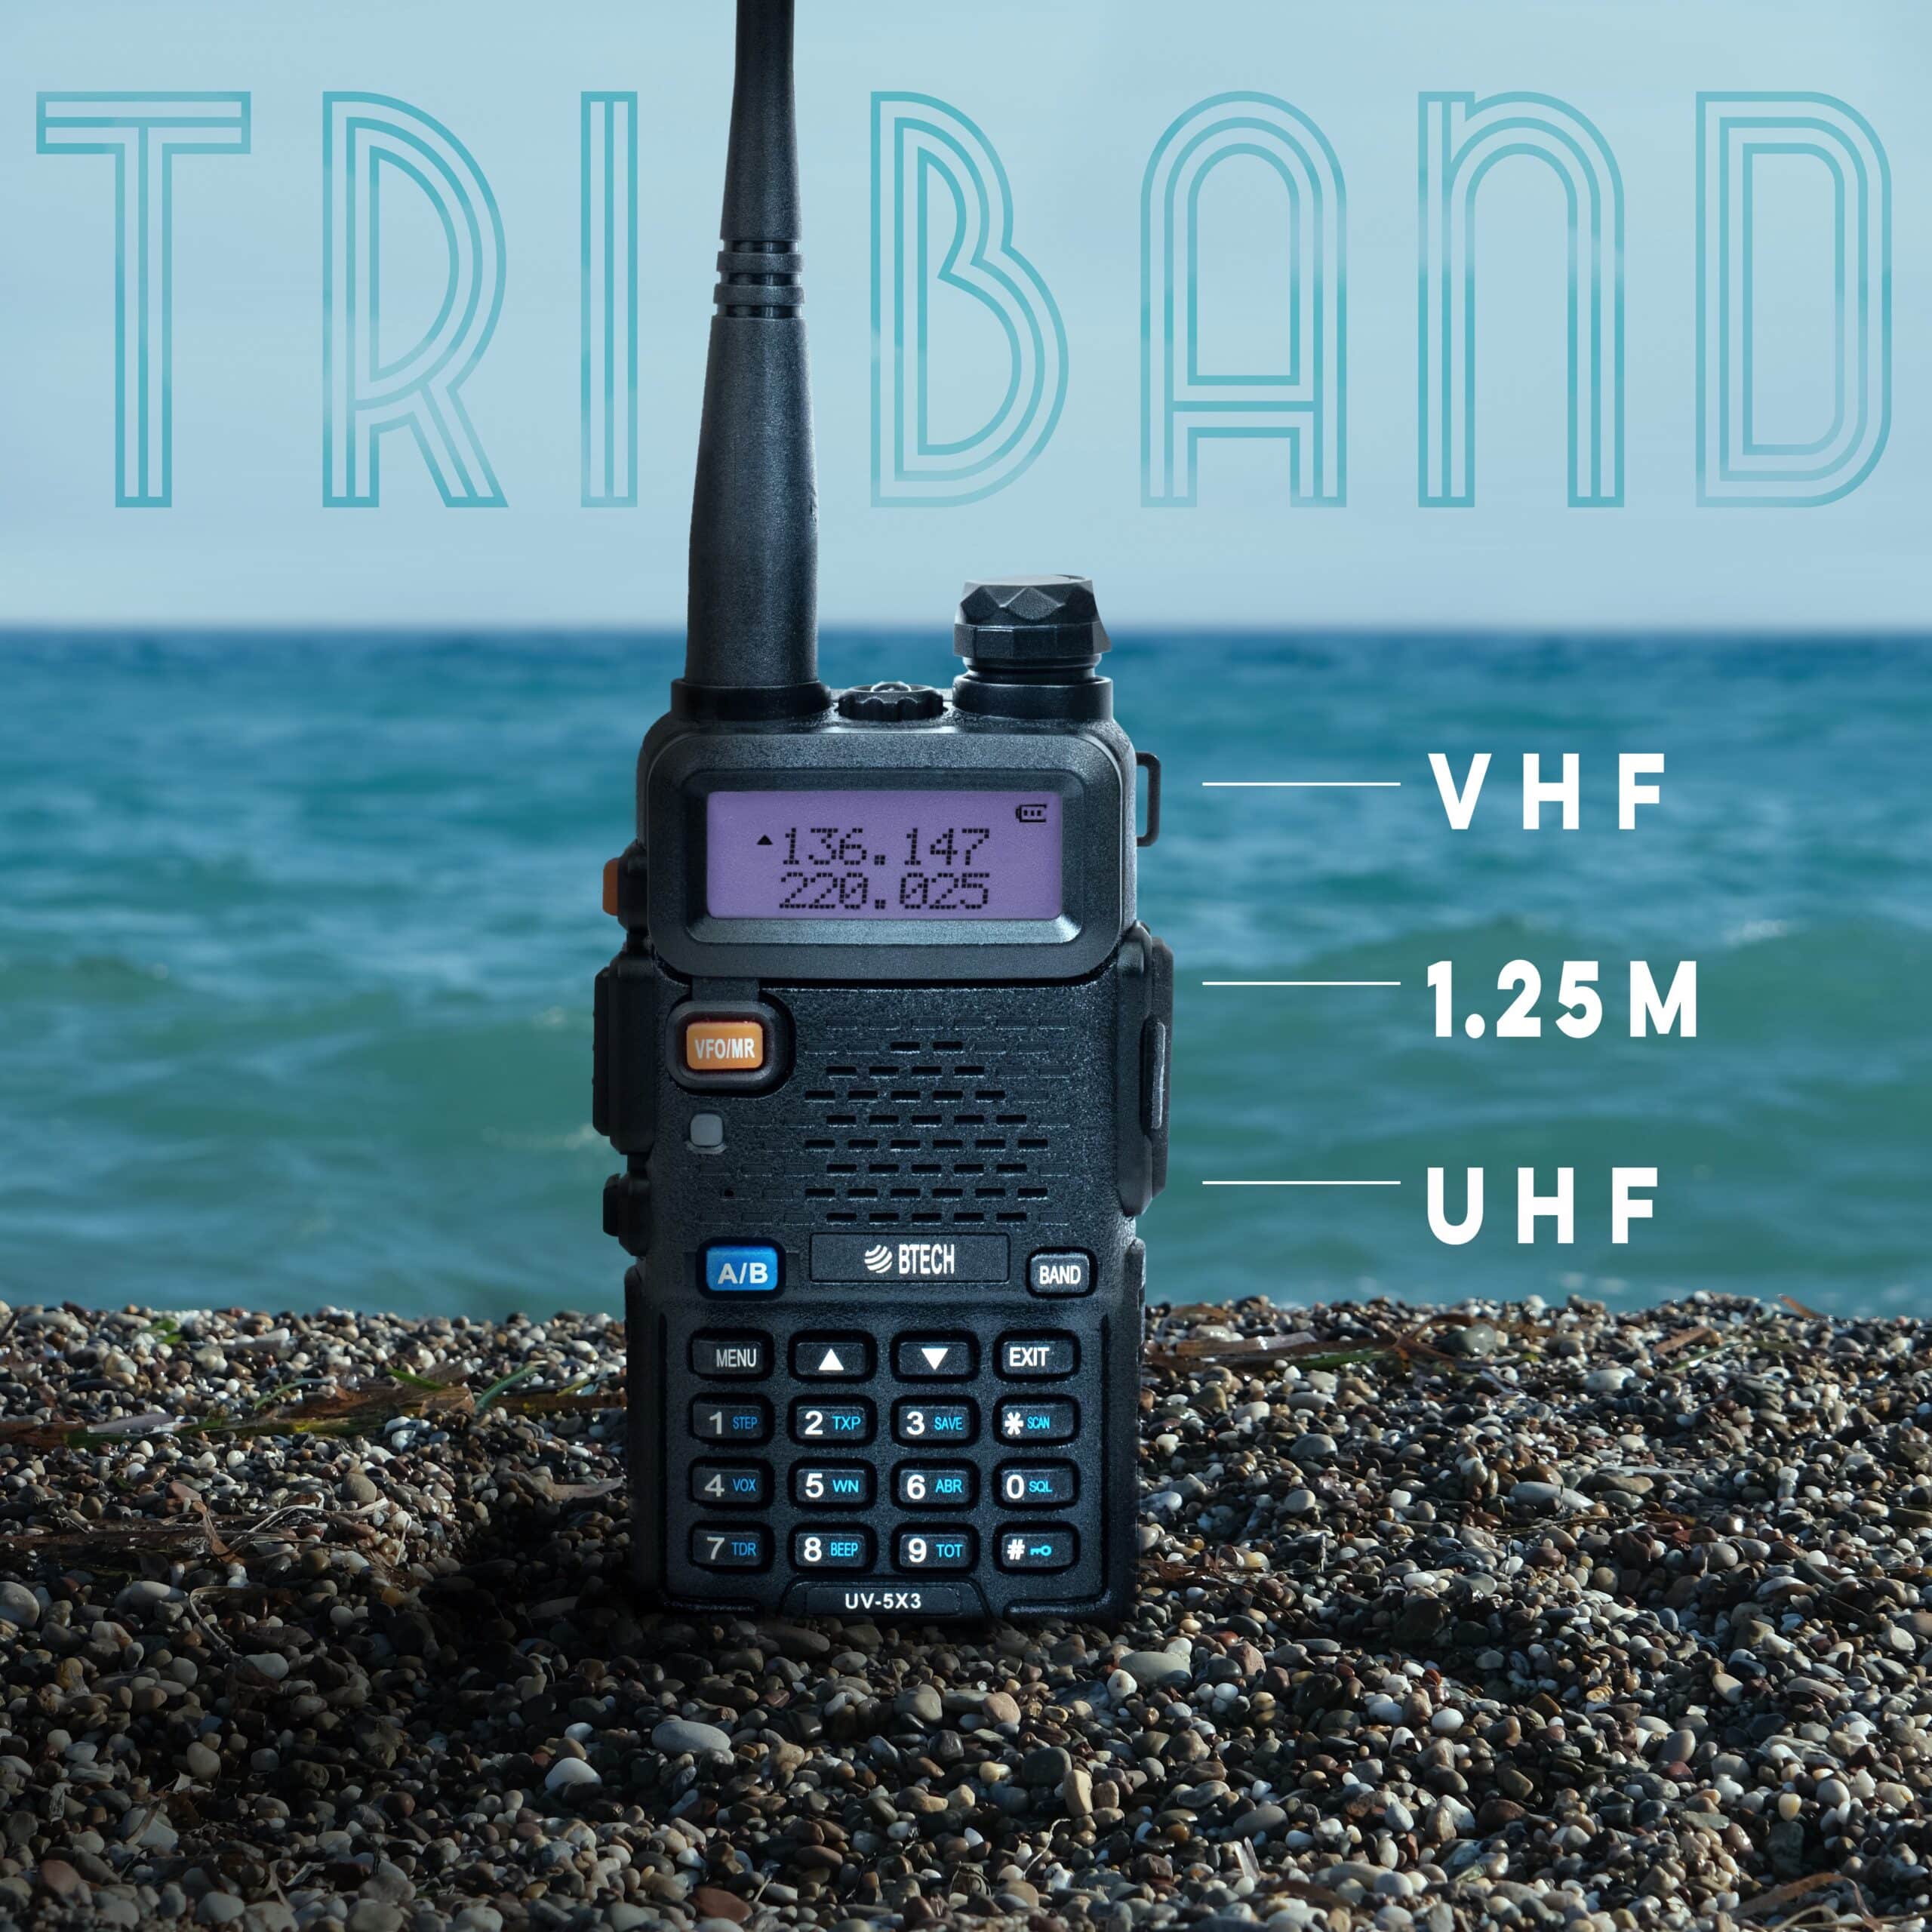 Baofeng x Radioddity UV-5RX3 Tri-band Radio VHF, 1.25M, UHF Amateur Handheld Ham Two Way Radio Walkie Talkie with Earpiece and Programming Cable - 1